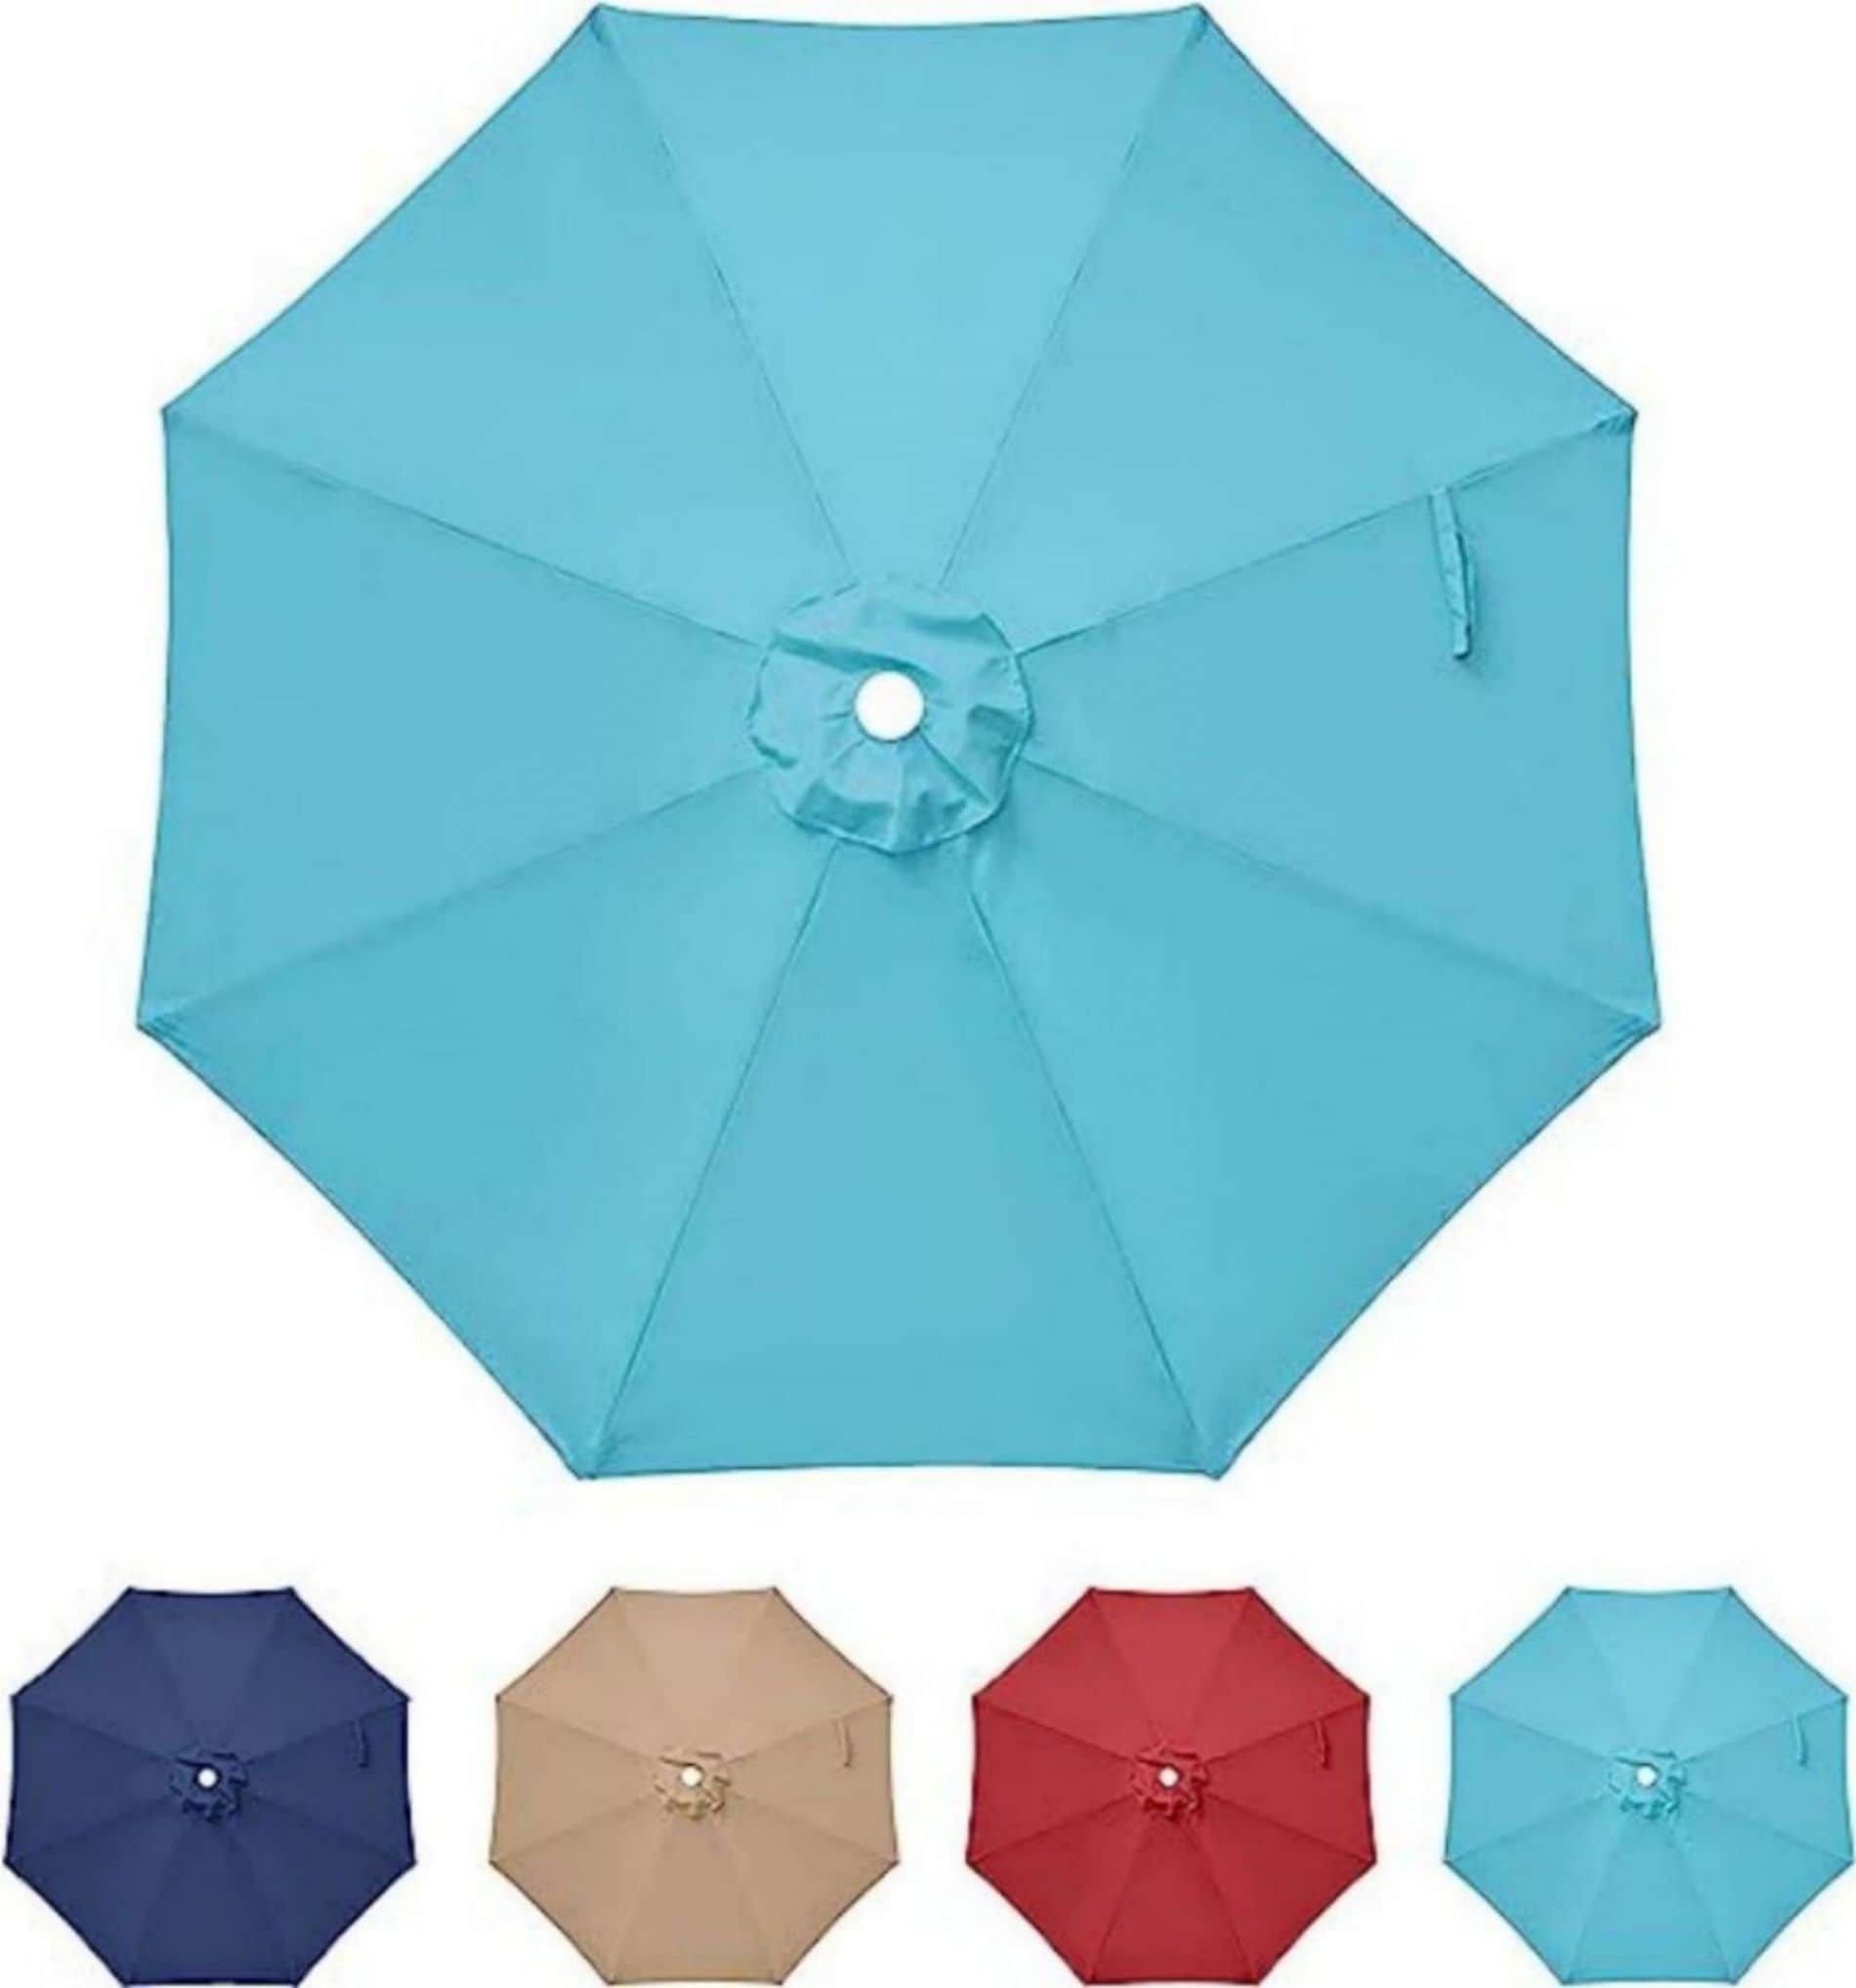 Cheap Umbrella Netting Tent Mesh Adjustable Garden Covers Wide Application  Sunshade